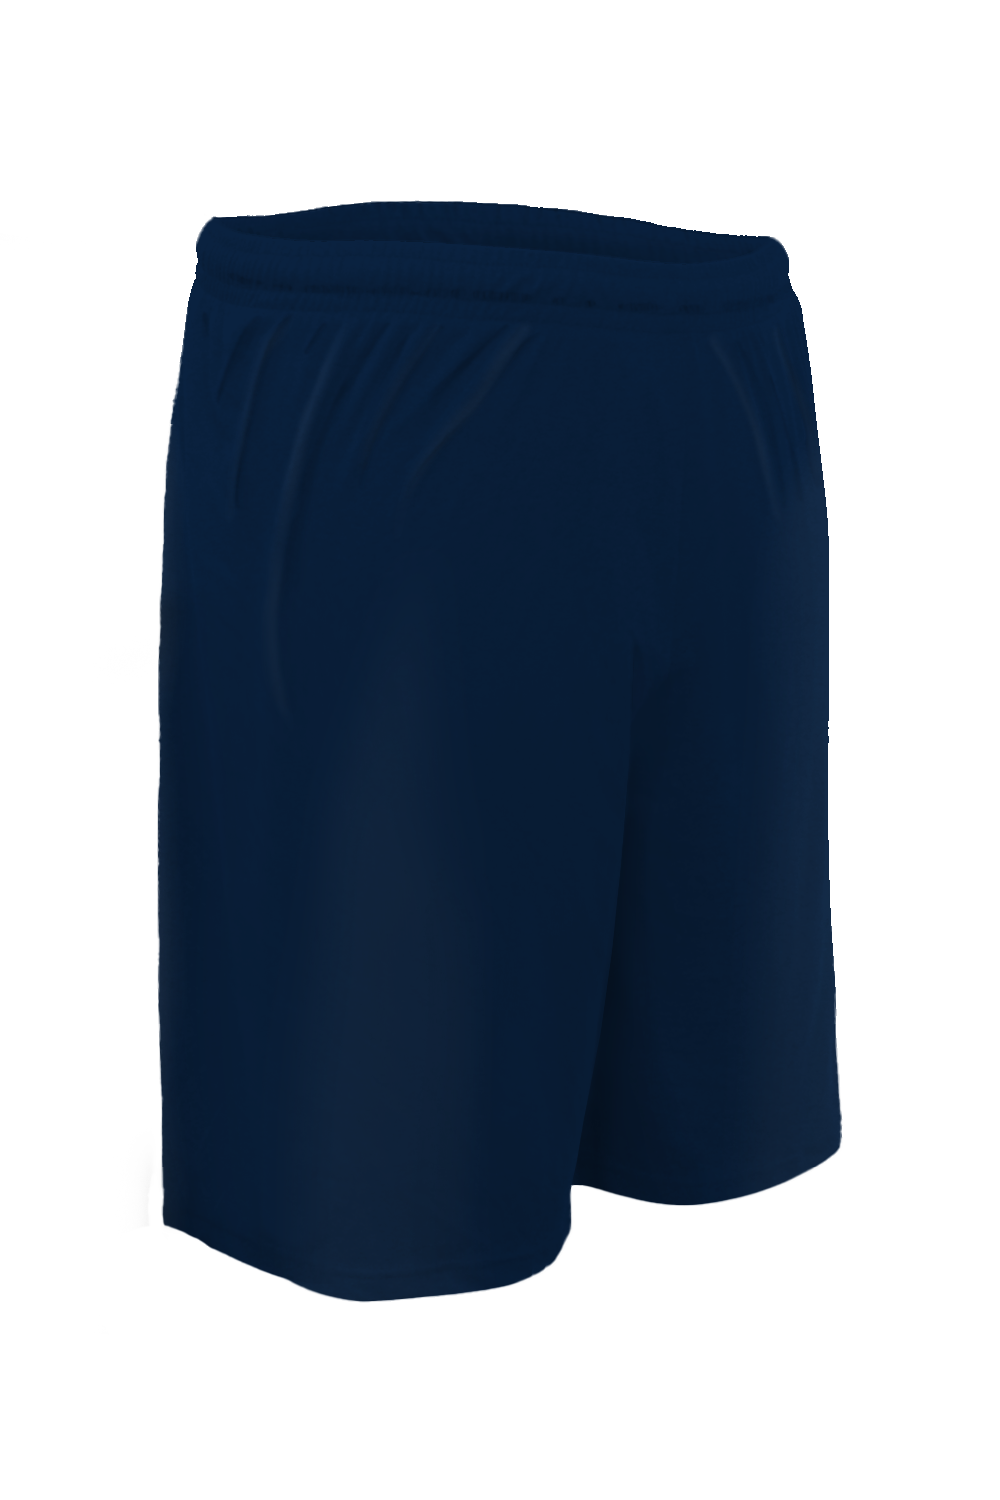 Standard Shorts (Navy)